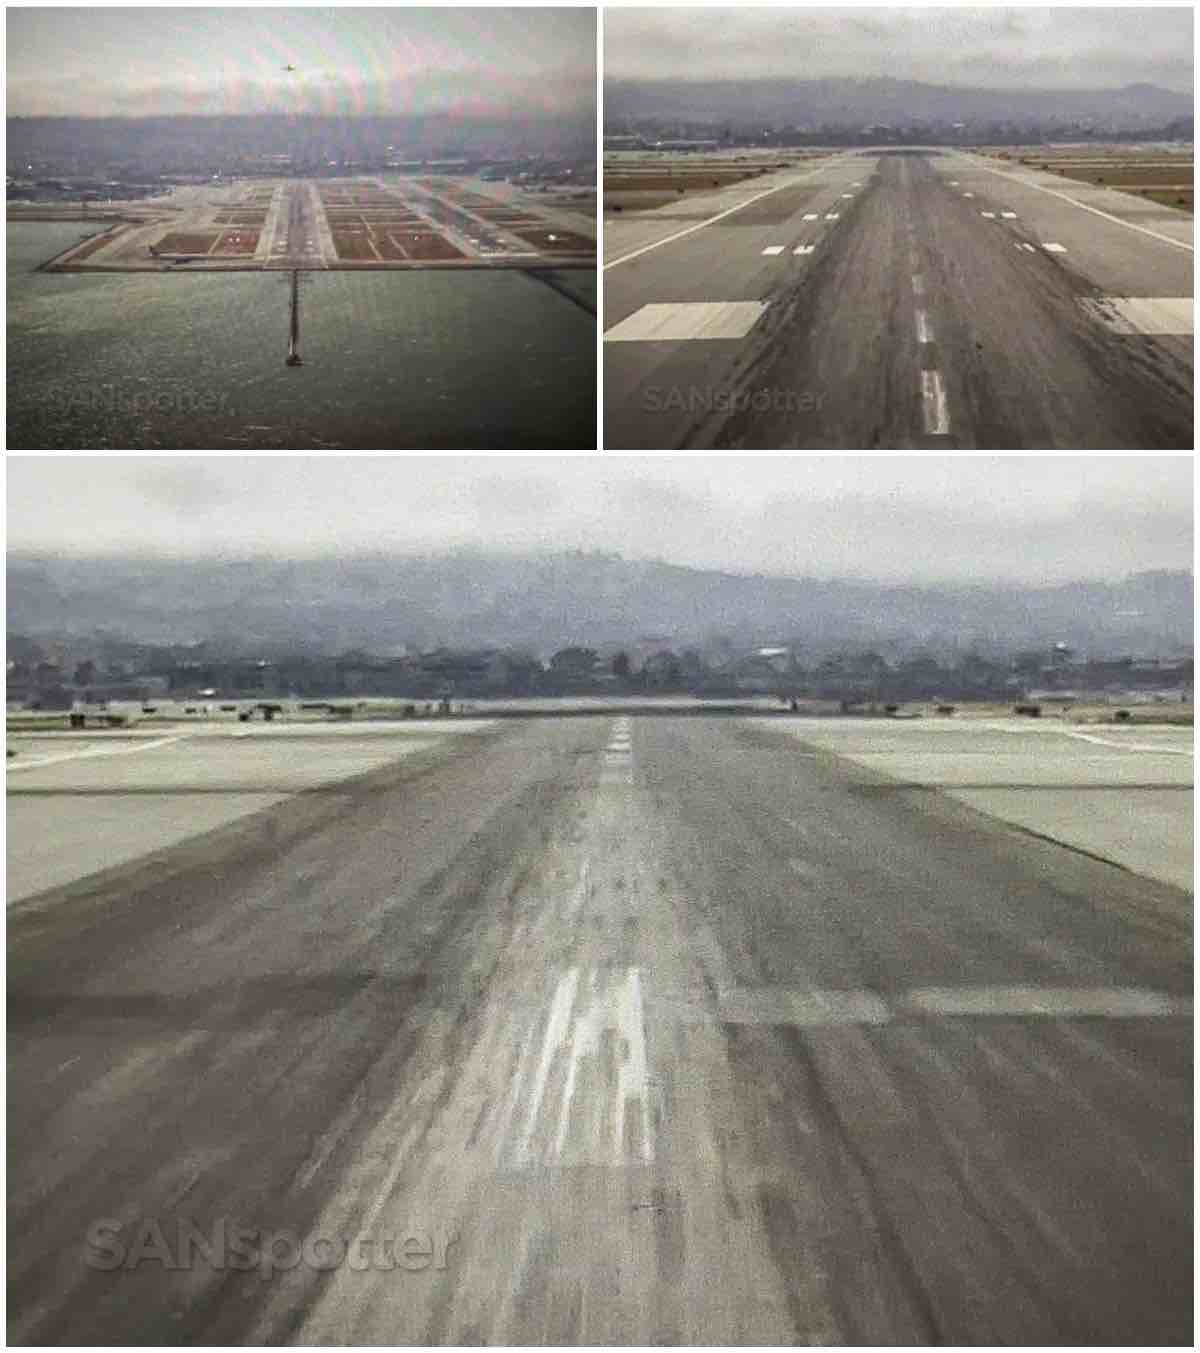 Forward view of landing on runway 28R SFO